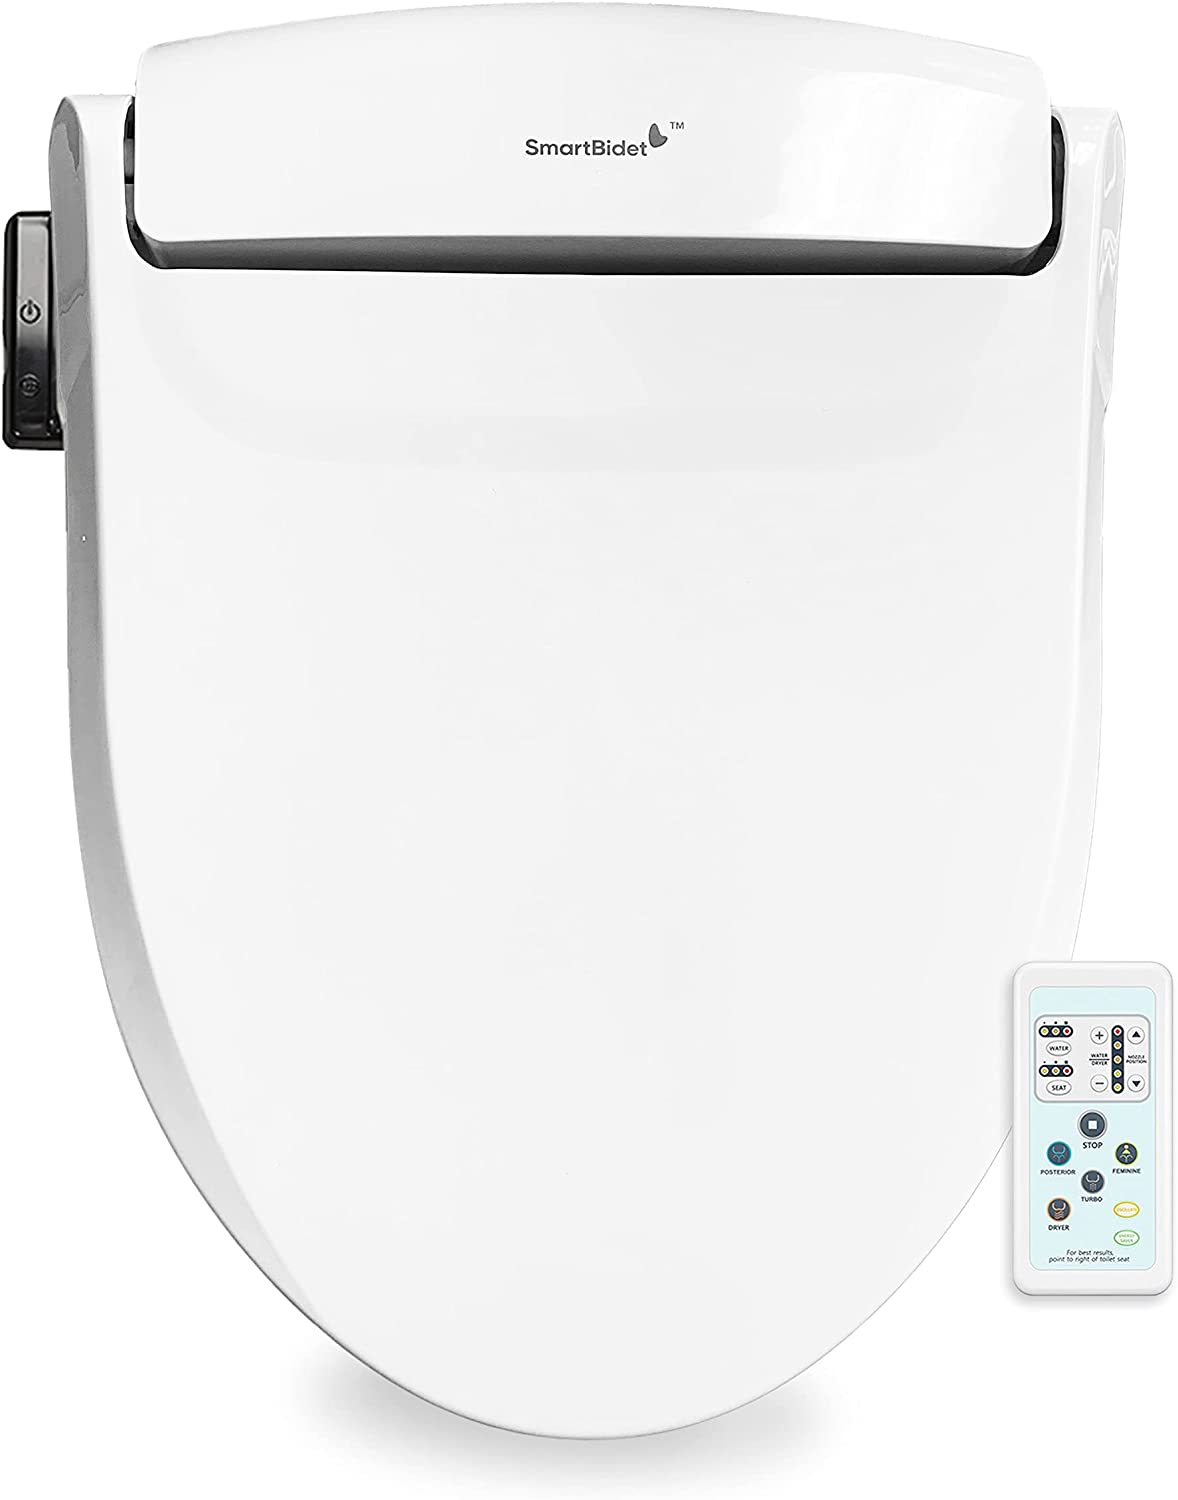 SmartBidet Self-Cleaning Wireless Remote Electric Bidet Toilet Seat